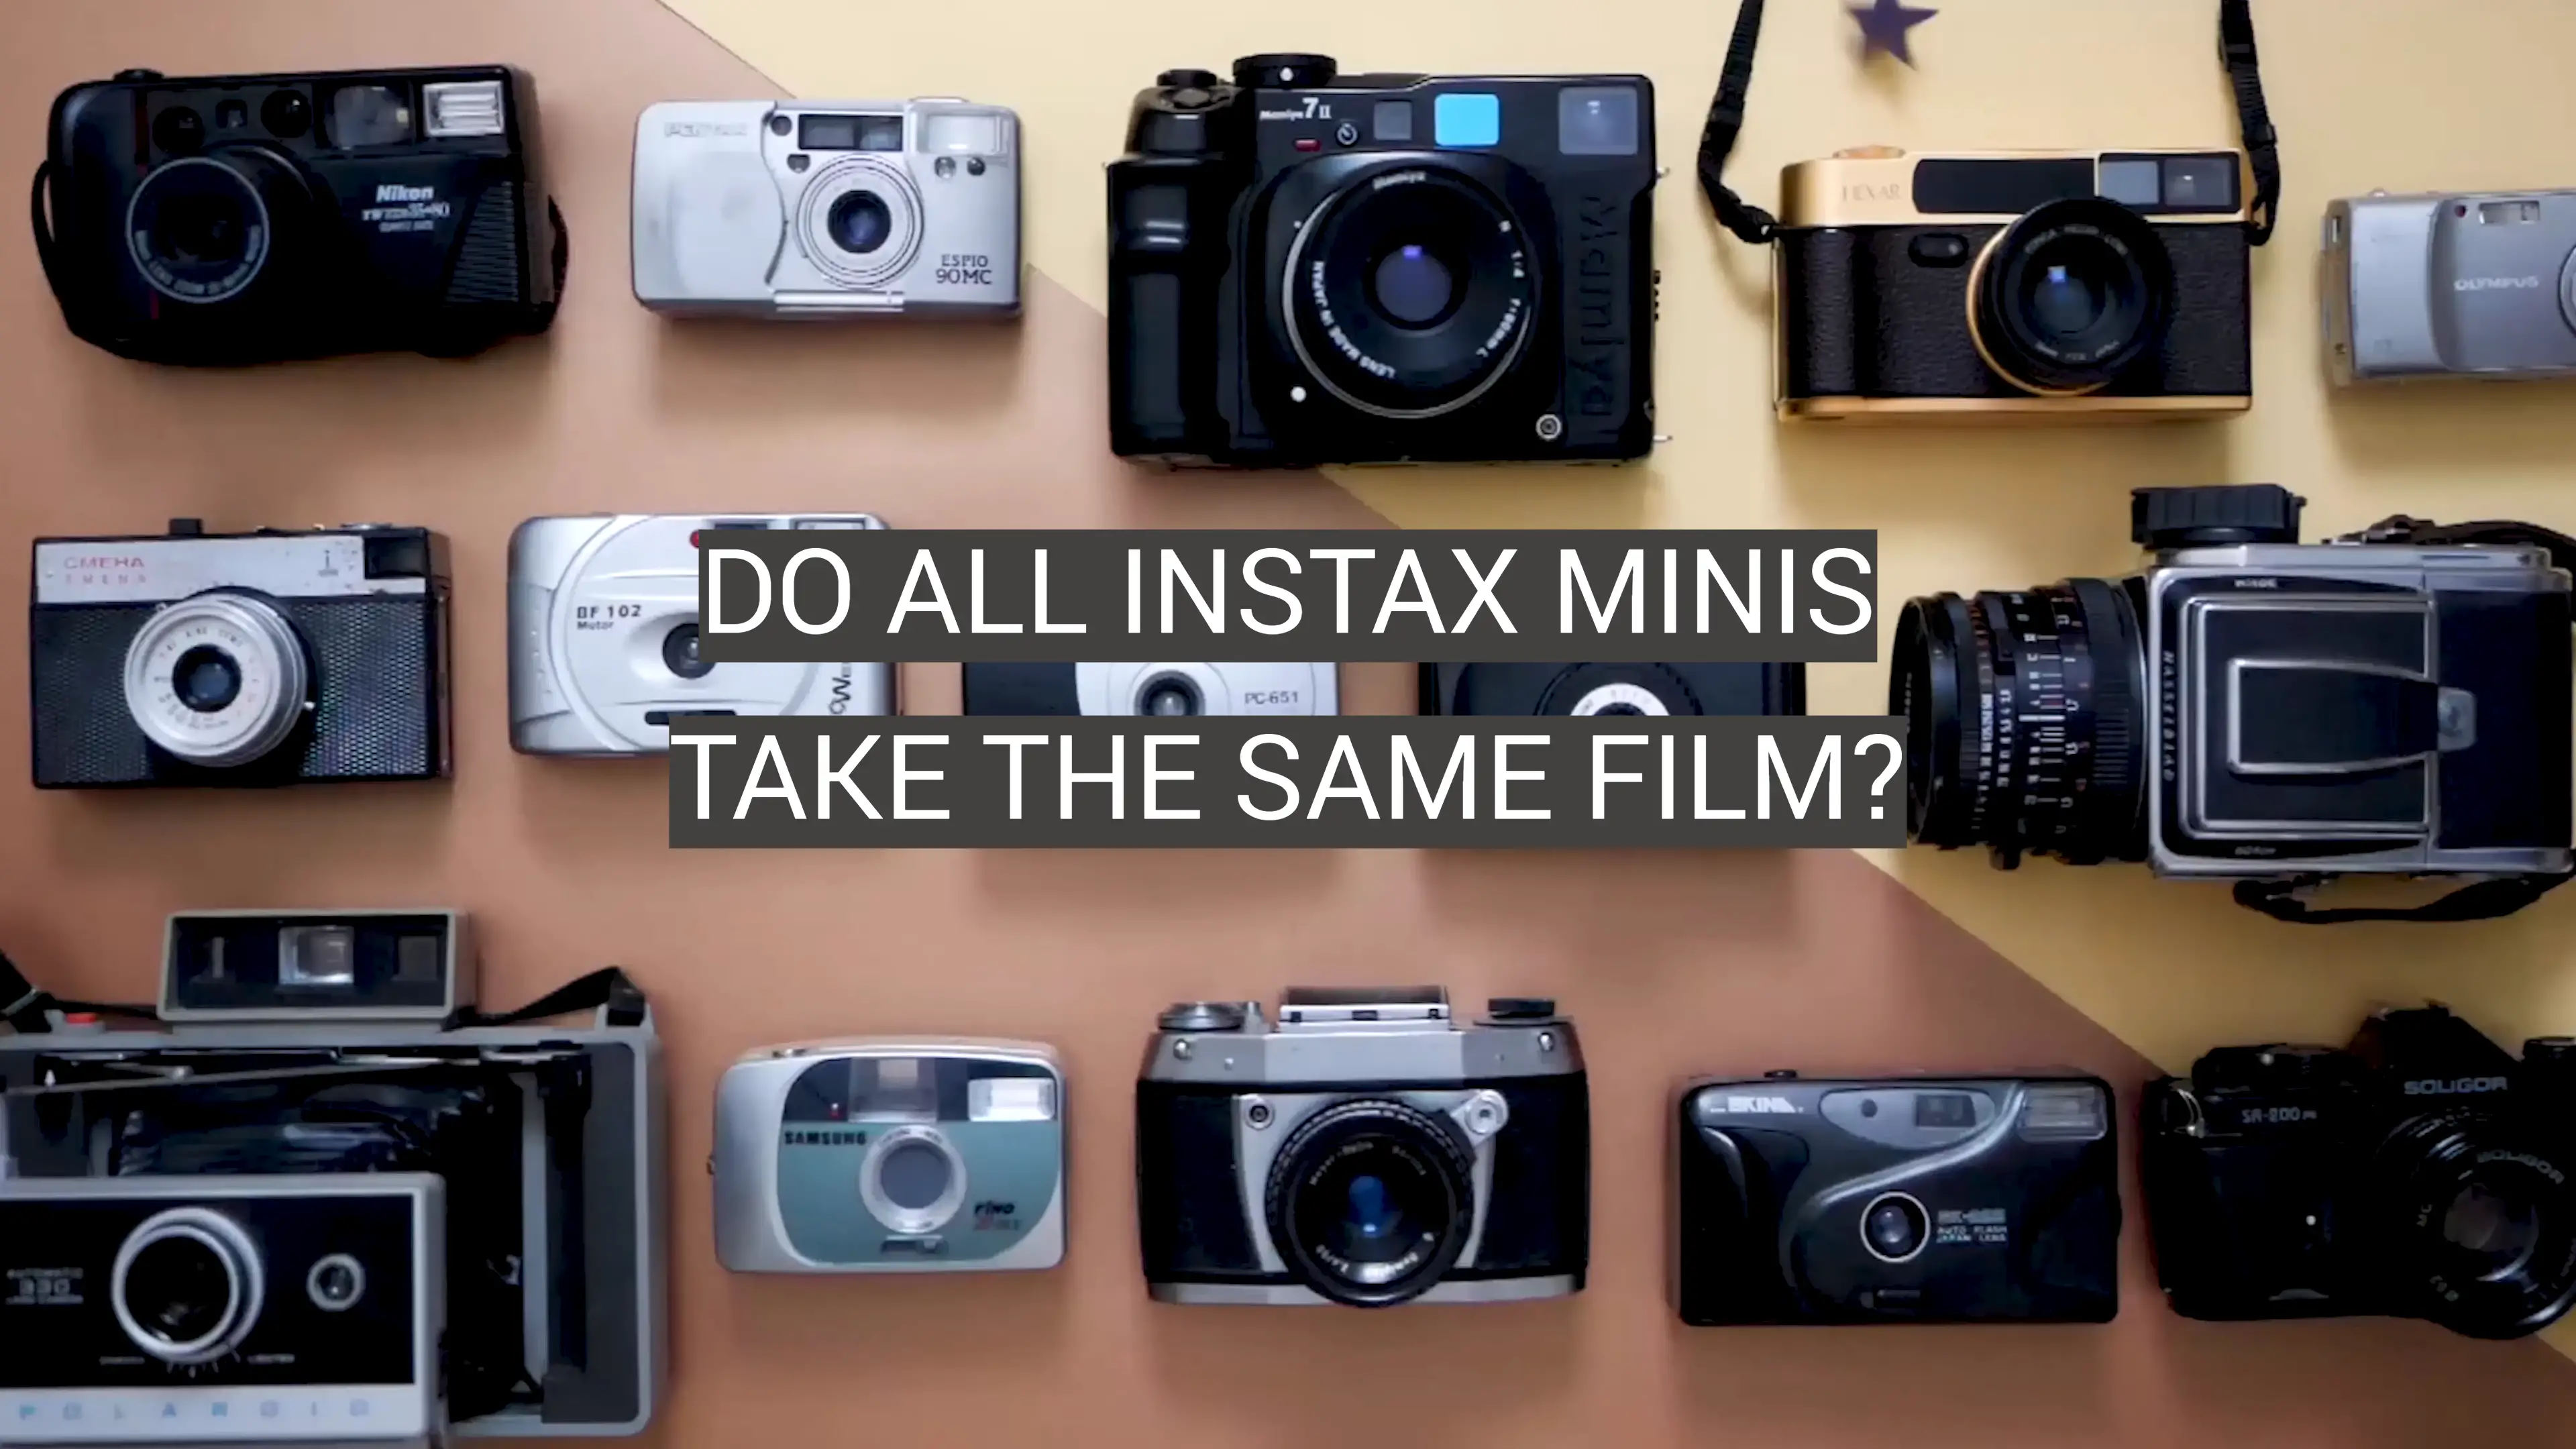 Do All Instax Minis Take the Same Film?